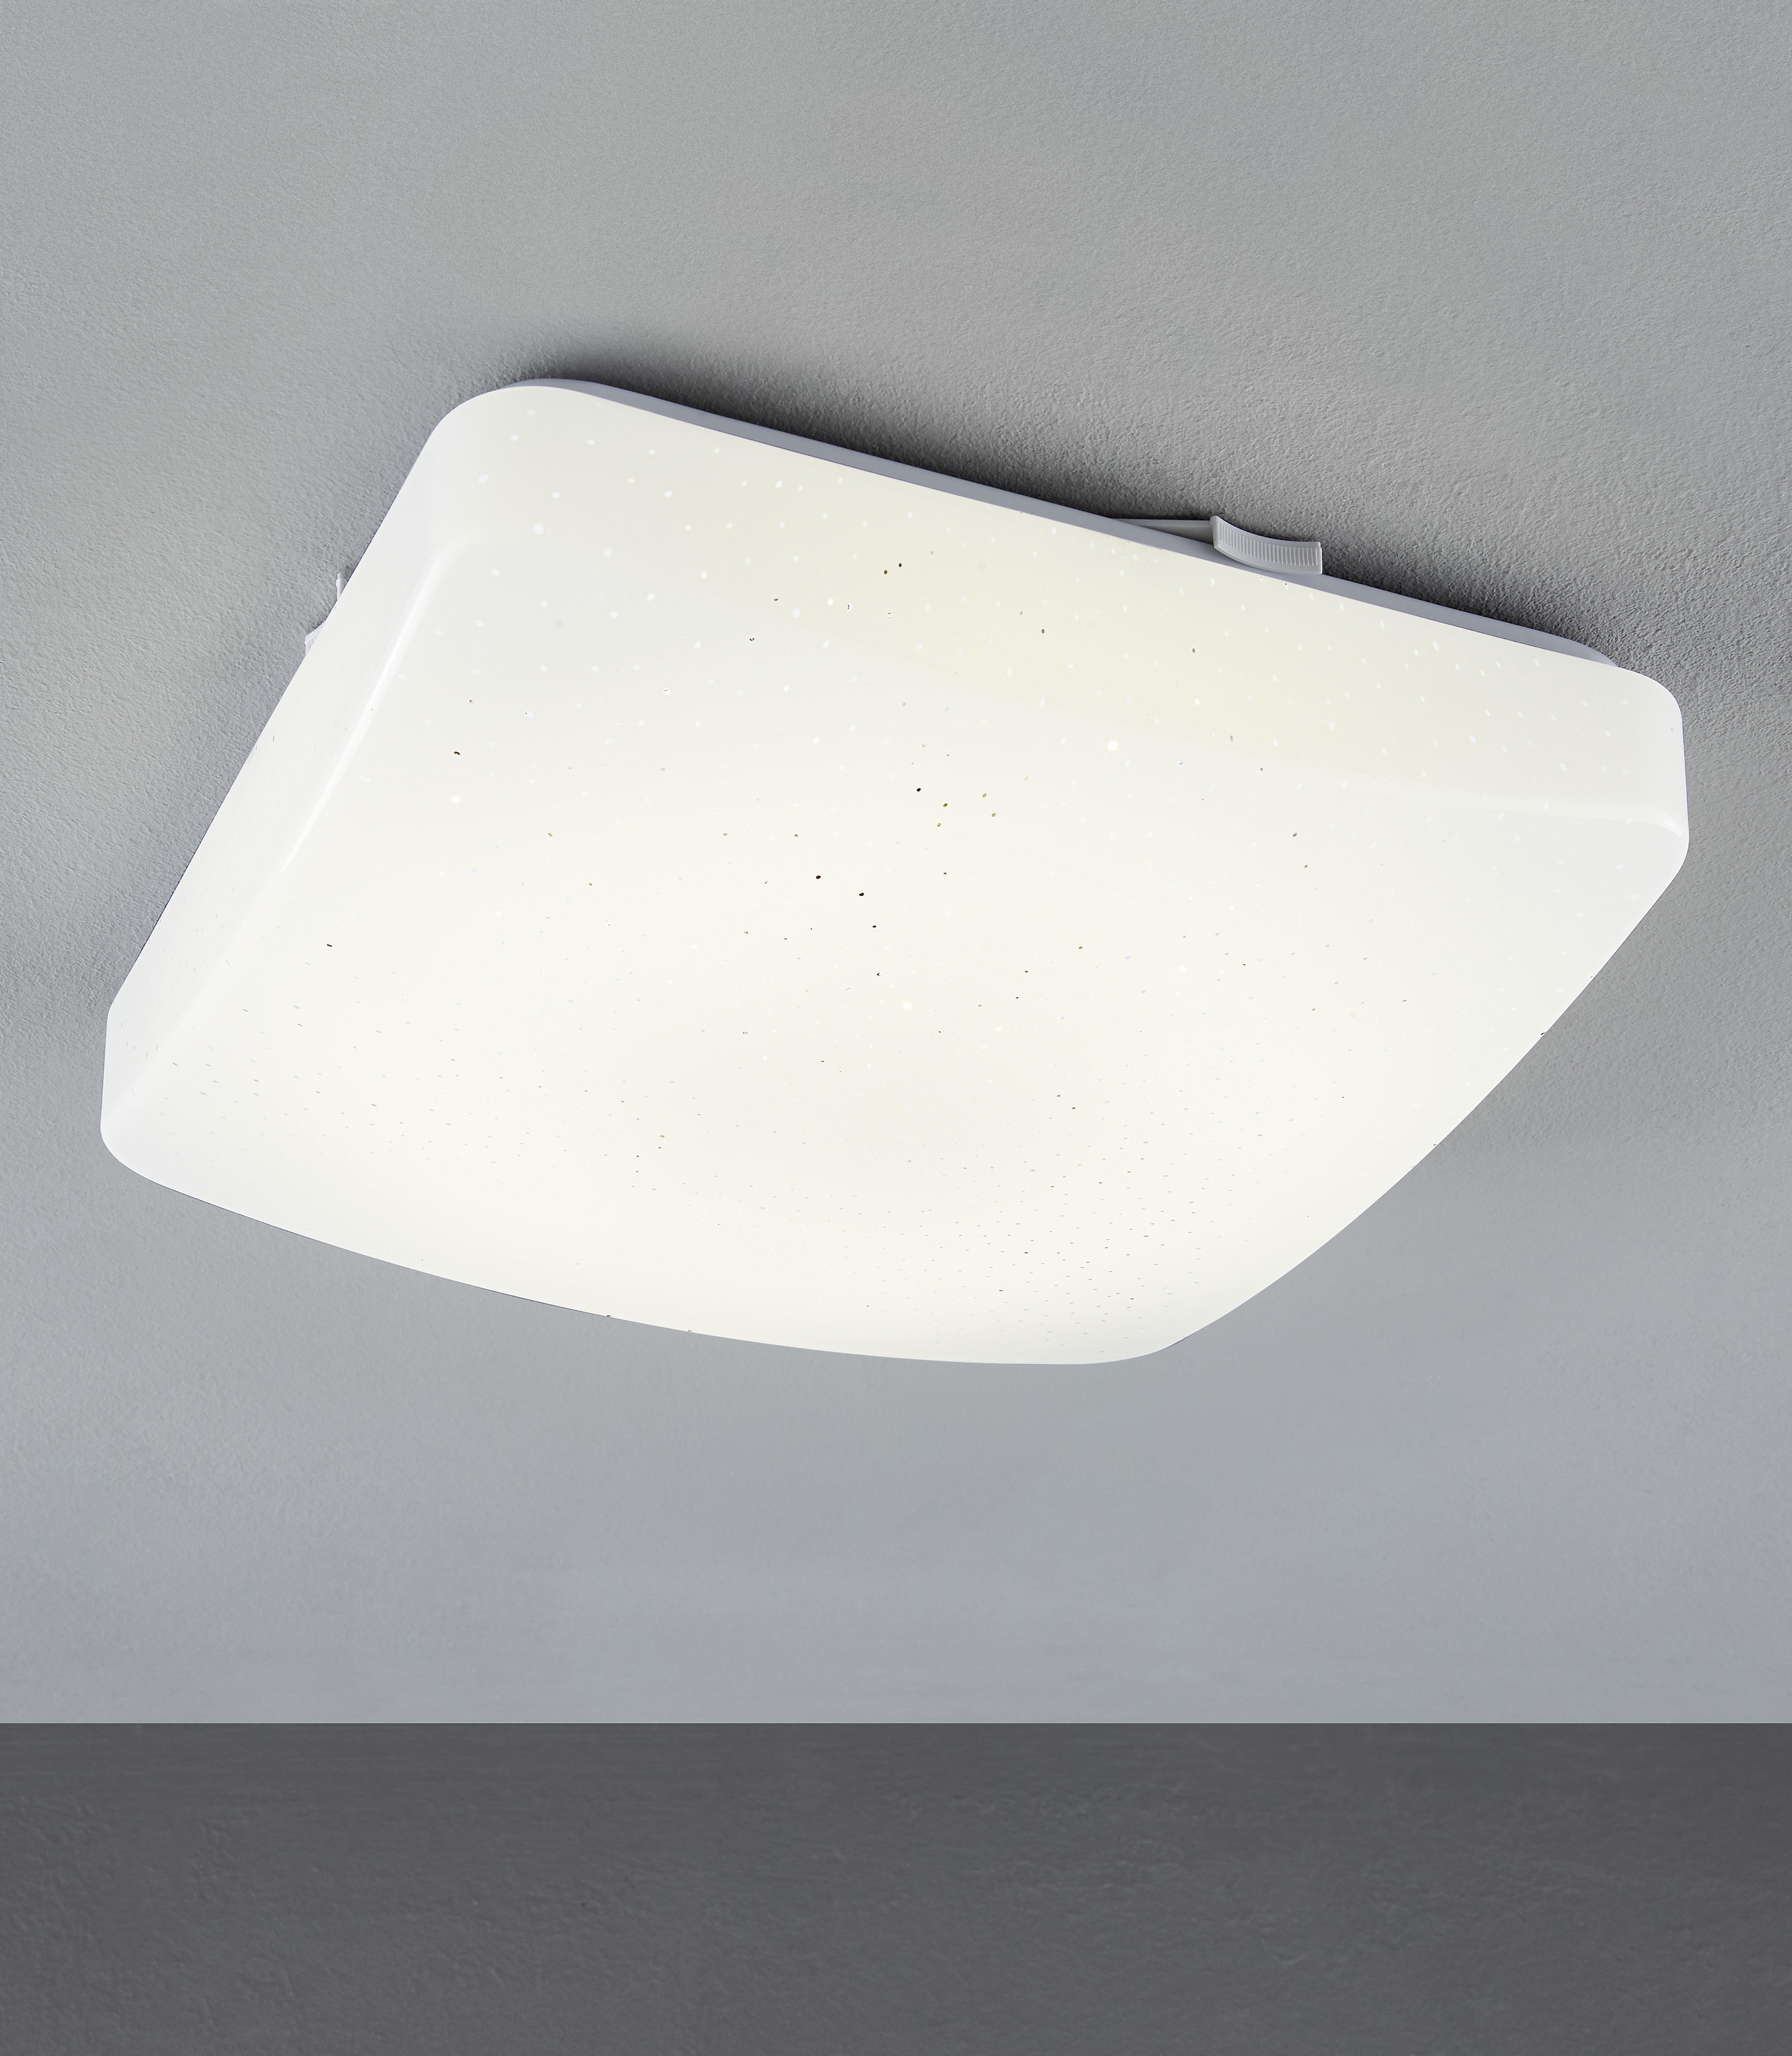 PLAFONIERĂ CU LED - alb, Basics, plastic/metal (27/27/6cm) - Boxxx